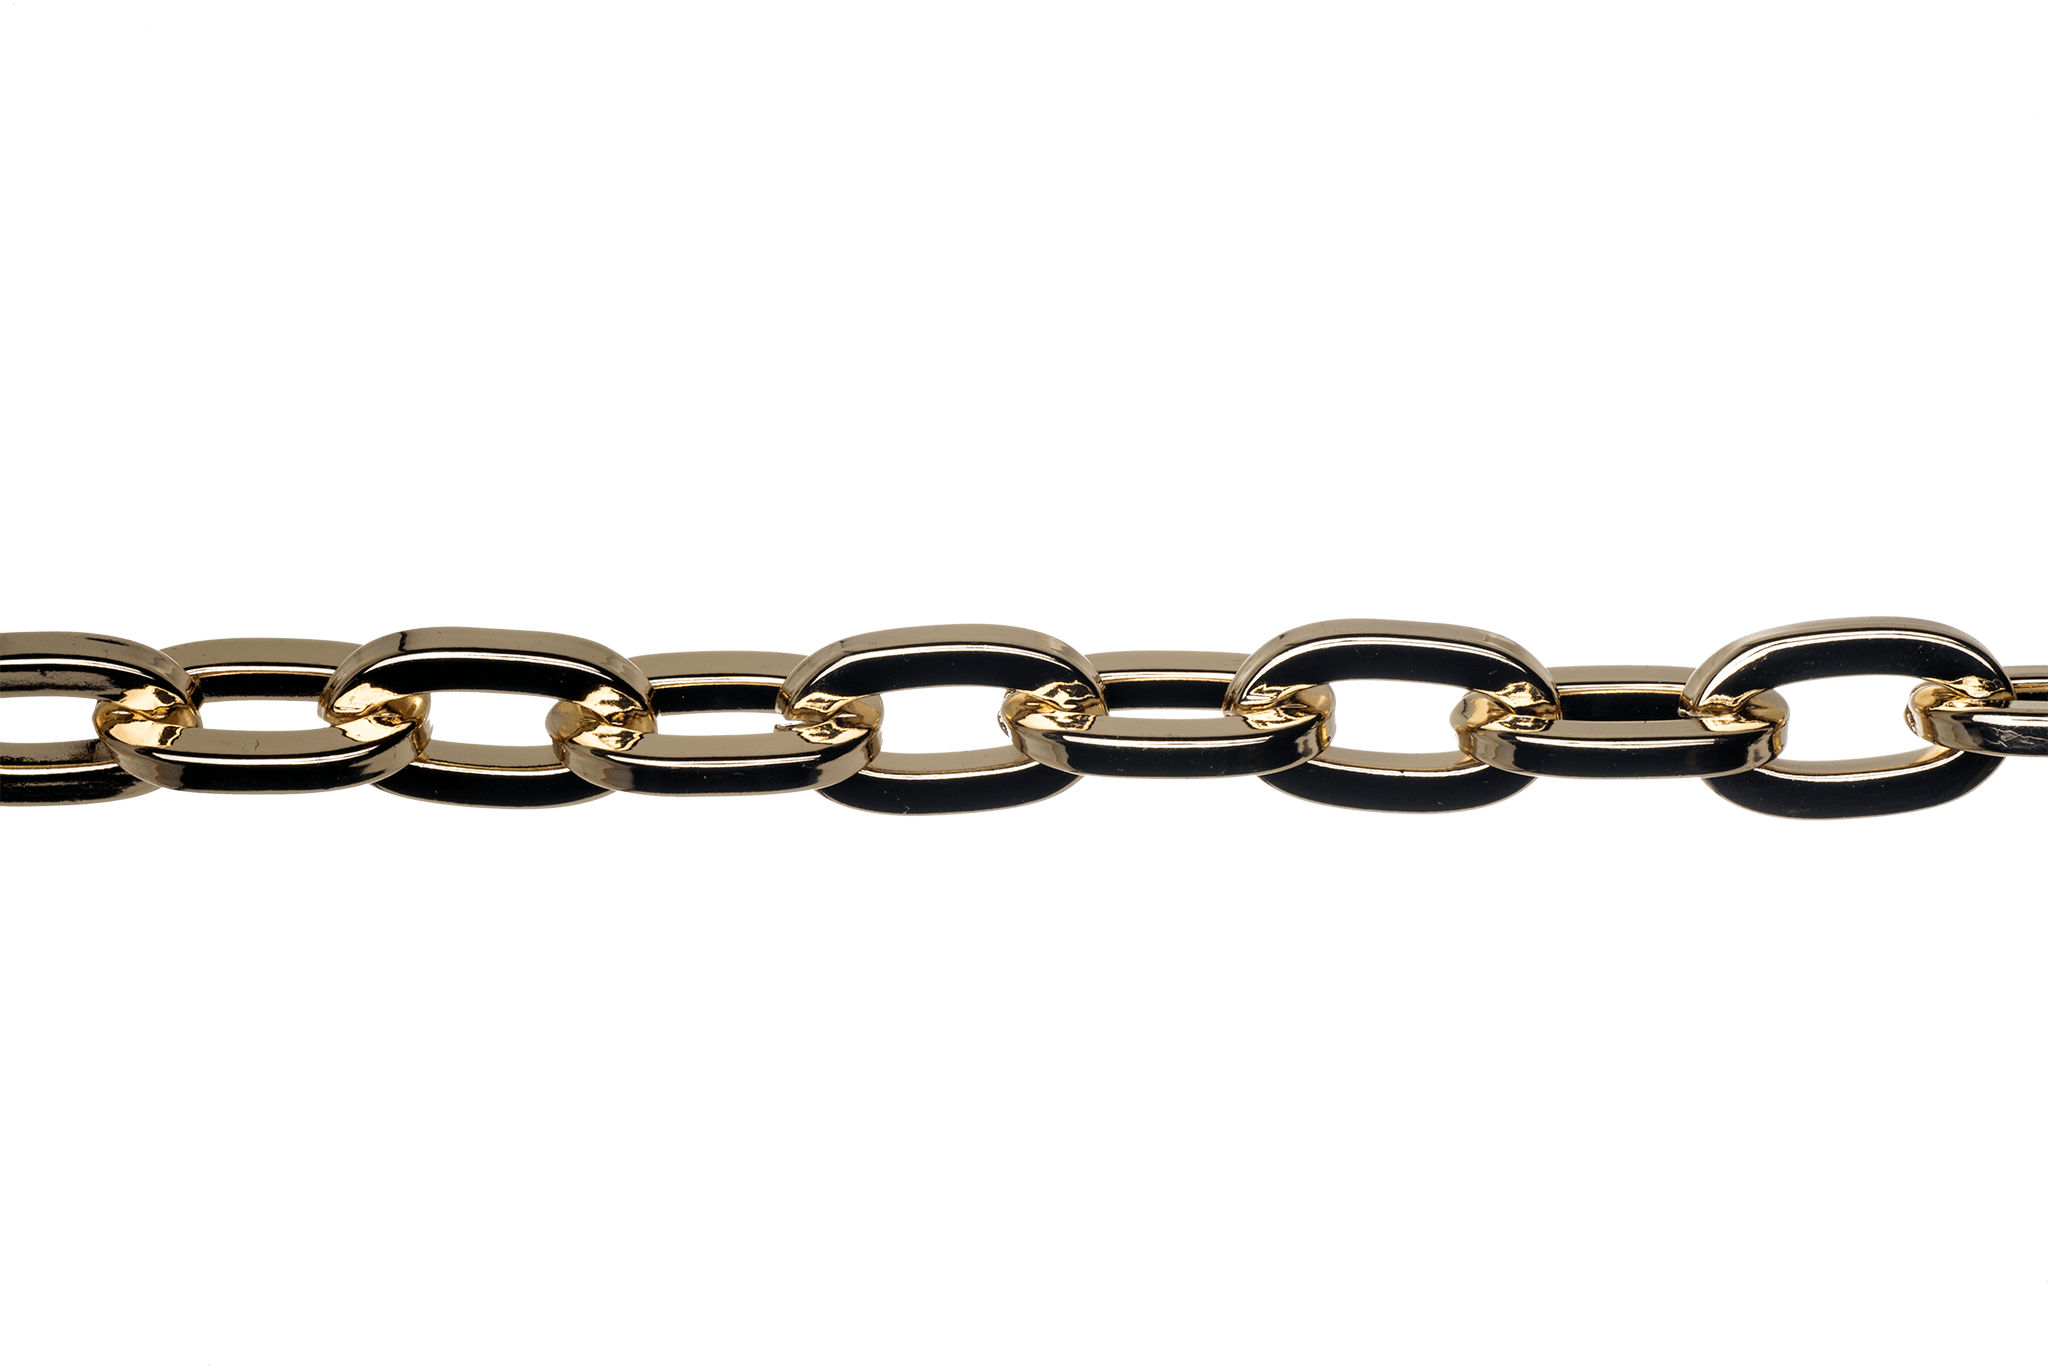 10feet U Shape Gold Chains for Jewelry Makingcopper Beaded 